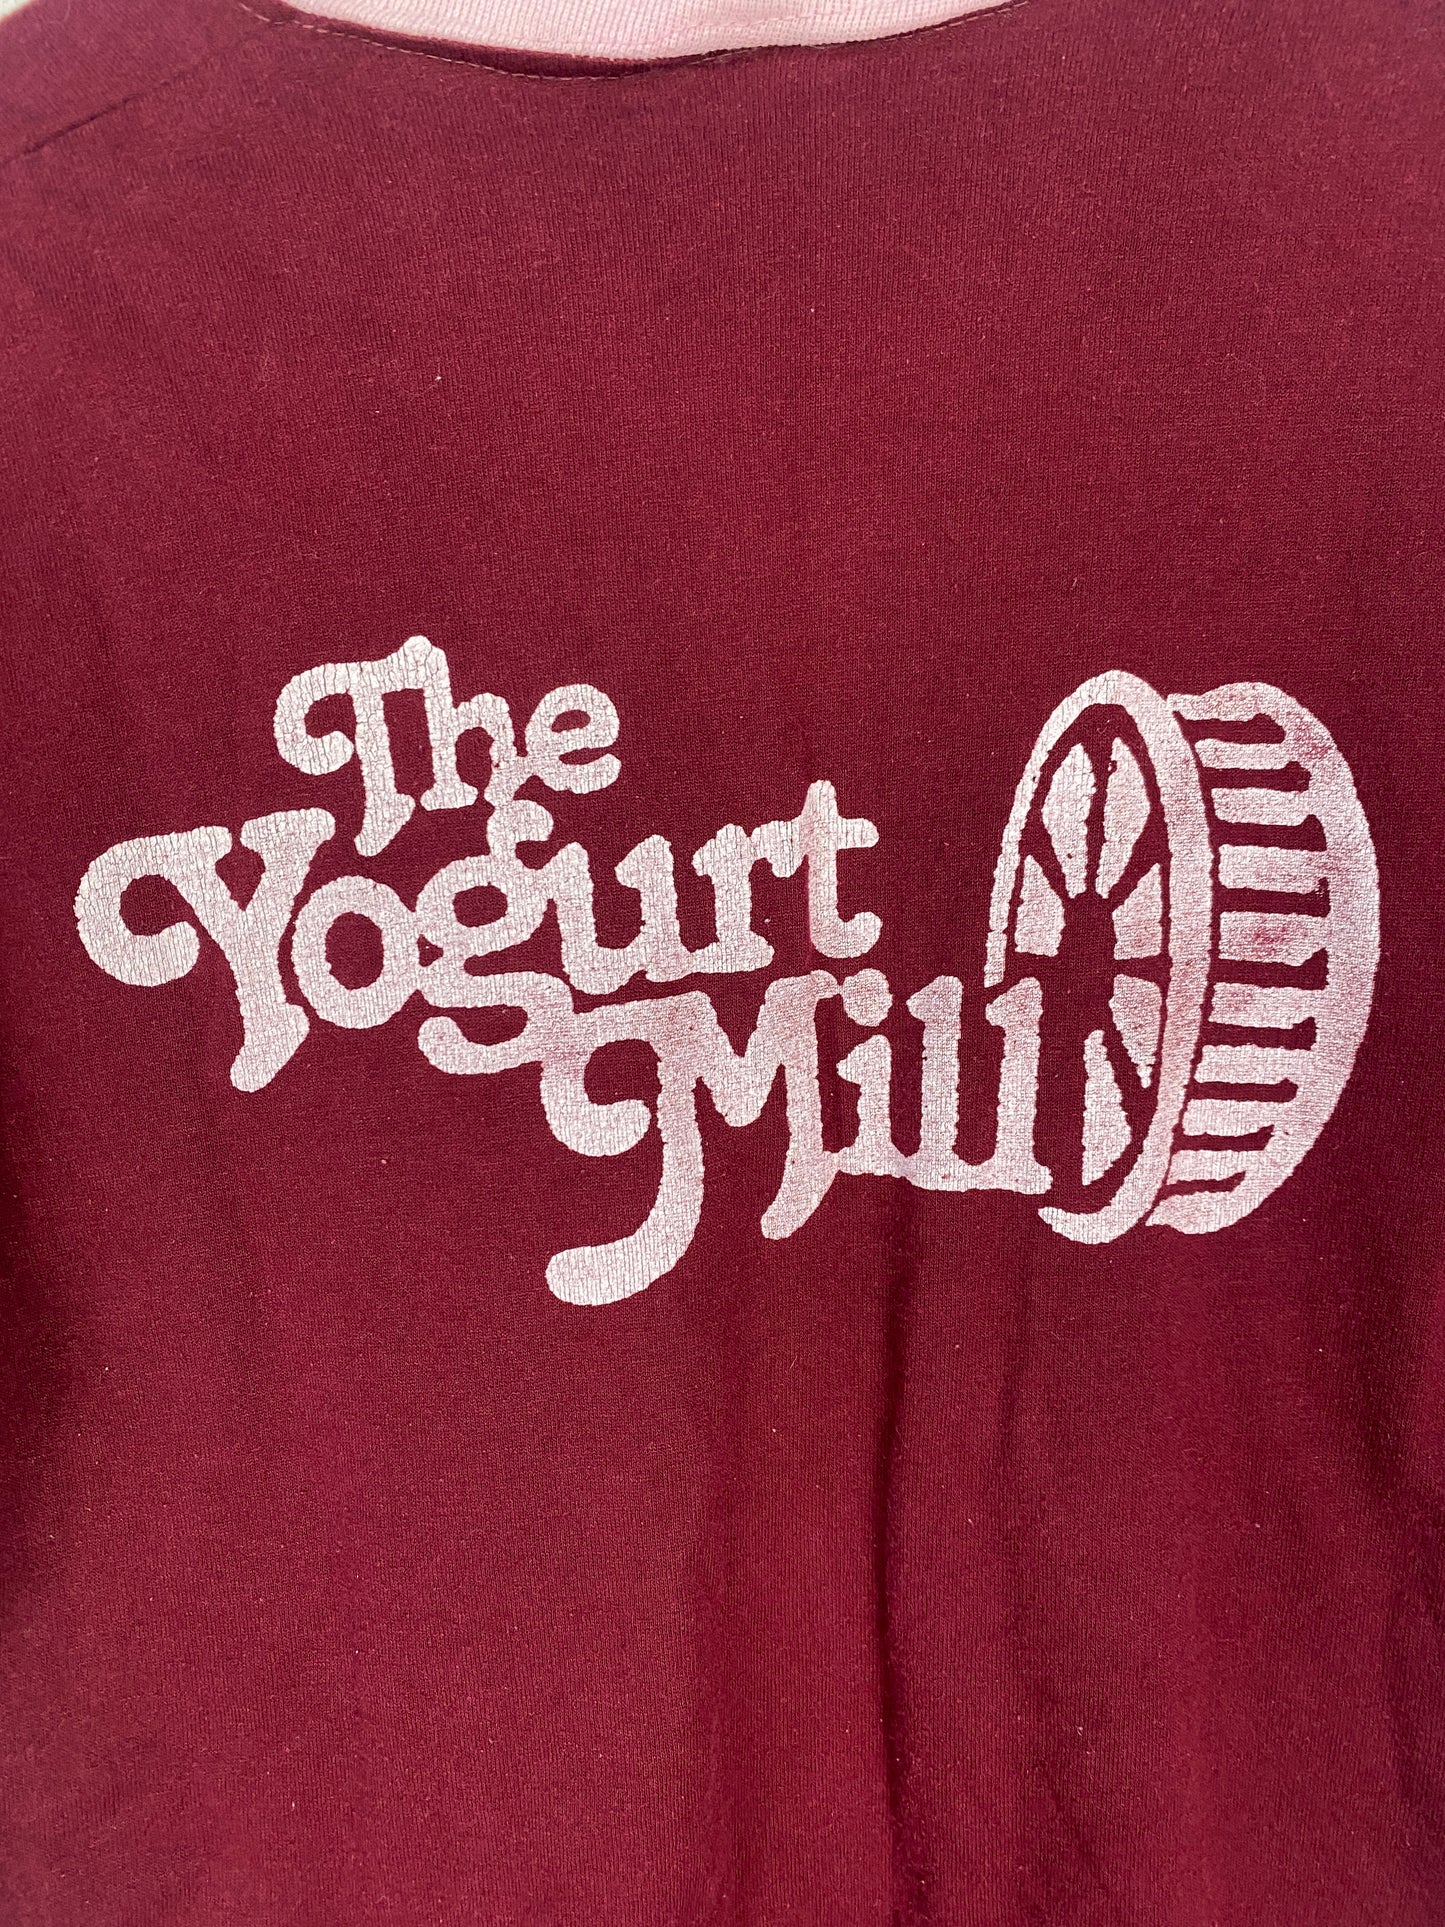 VTG The Yogurt Mill Tee Sz M